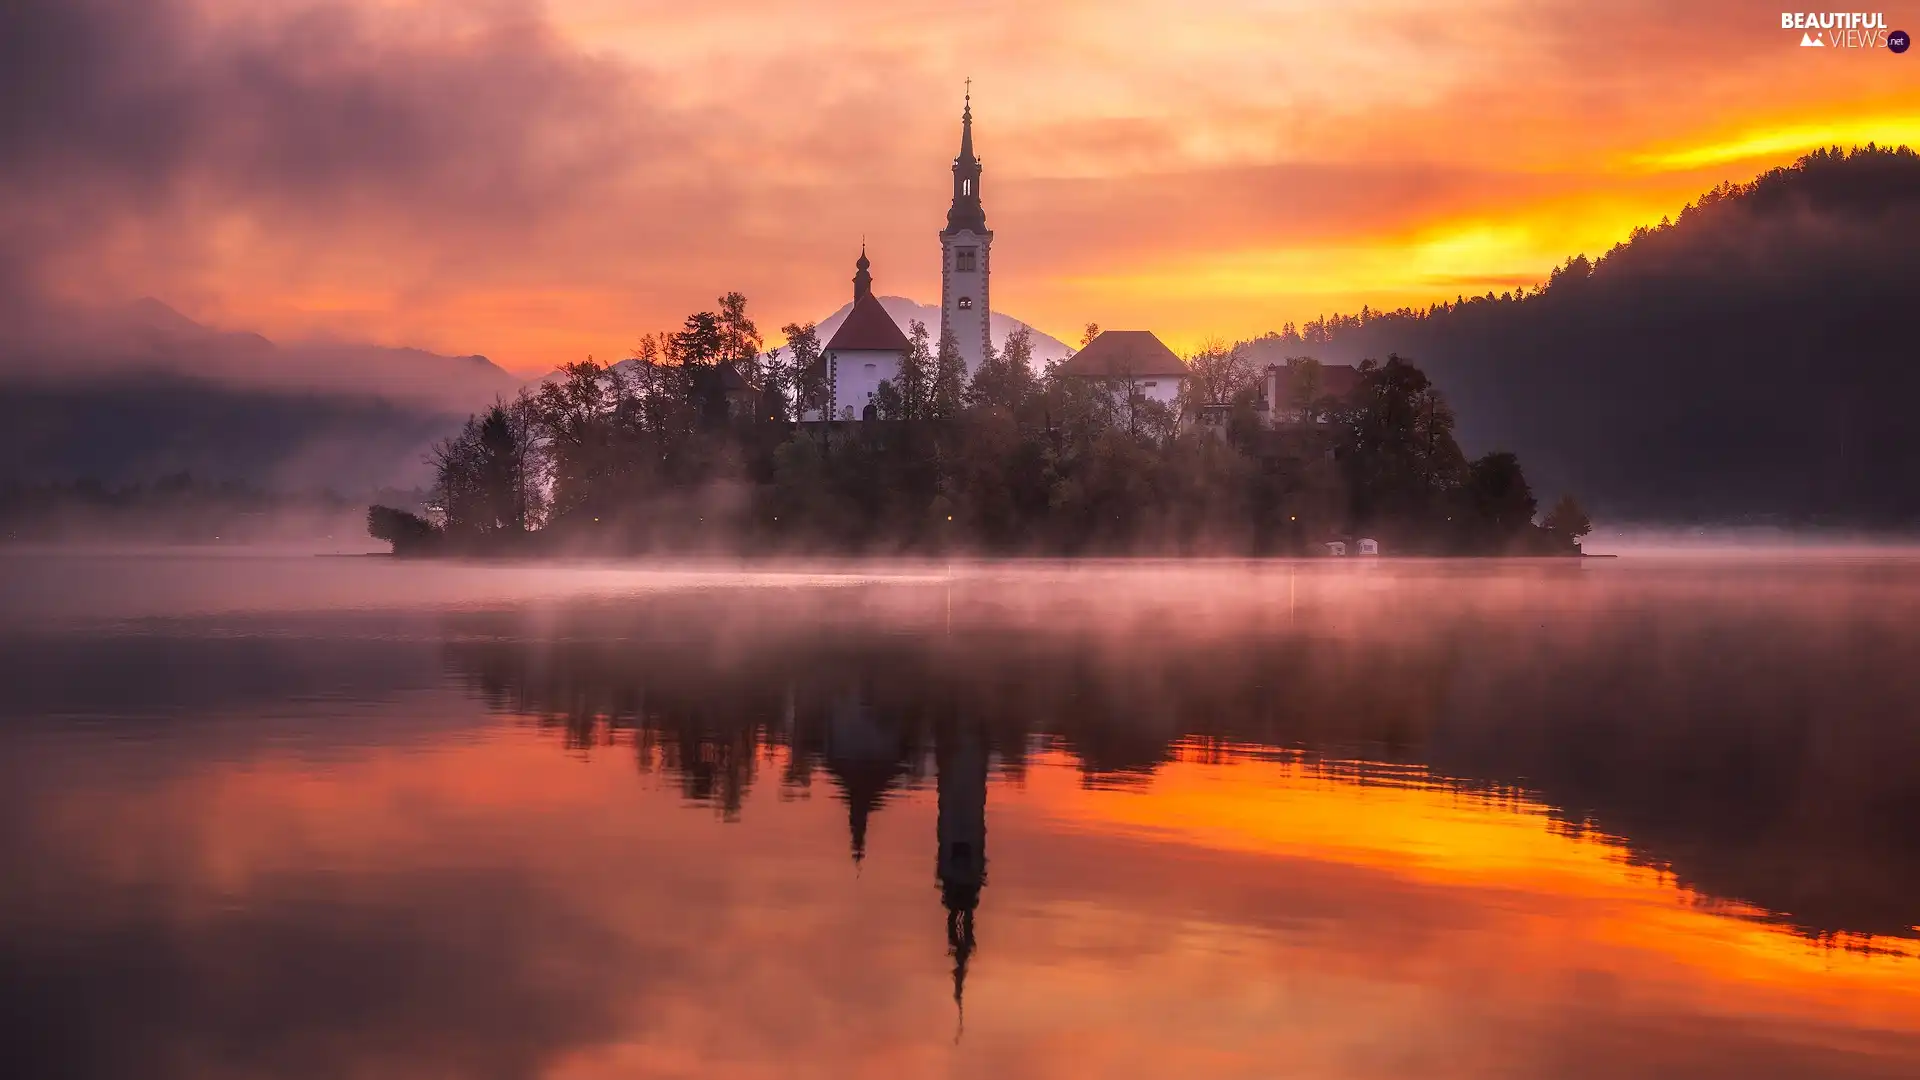 Lake Bled, Slovenia, Blejski Otok Island, Church of the Annunciation of the Virgin Mary, reflection, Fog, Julian Alps, Great Sunsets, Mountains